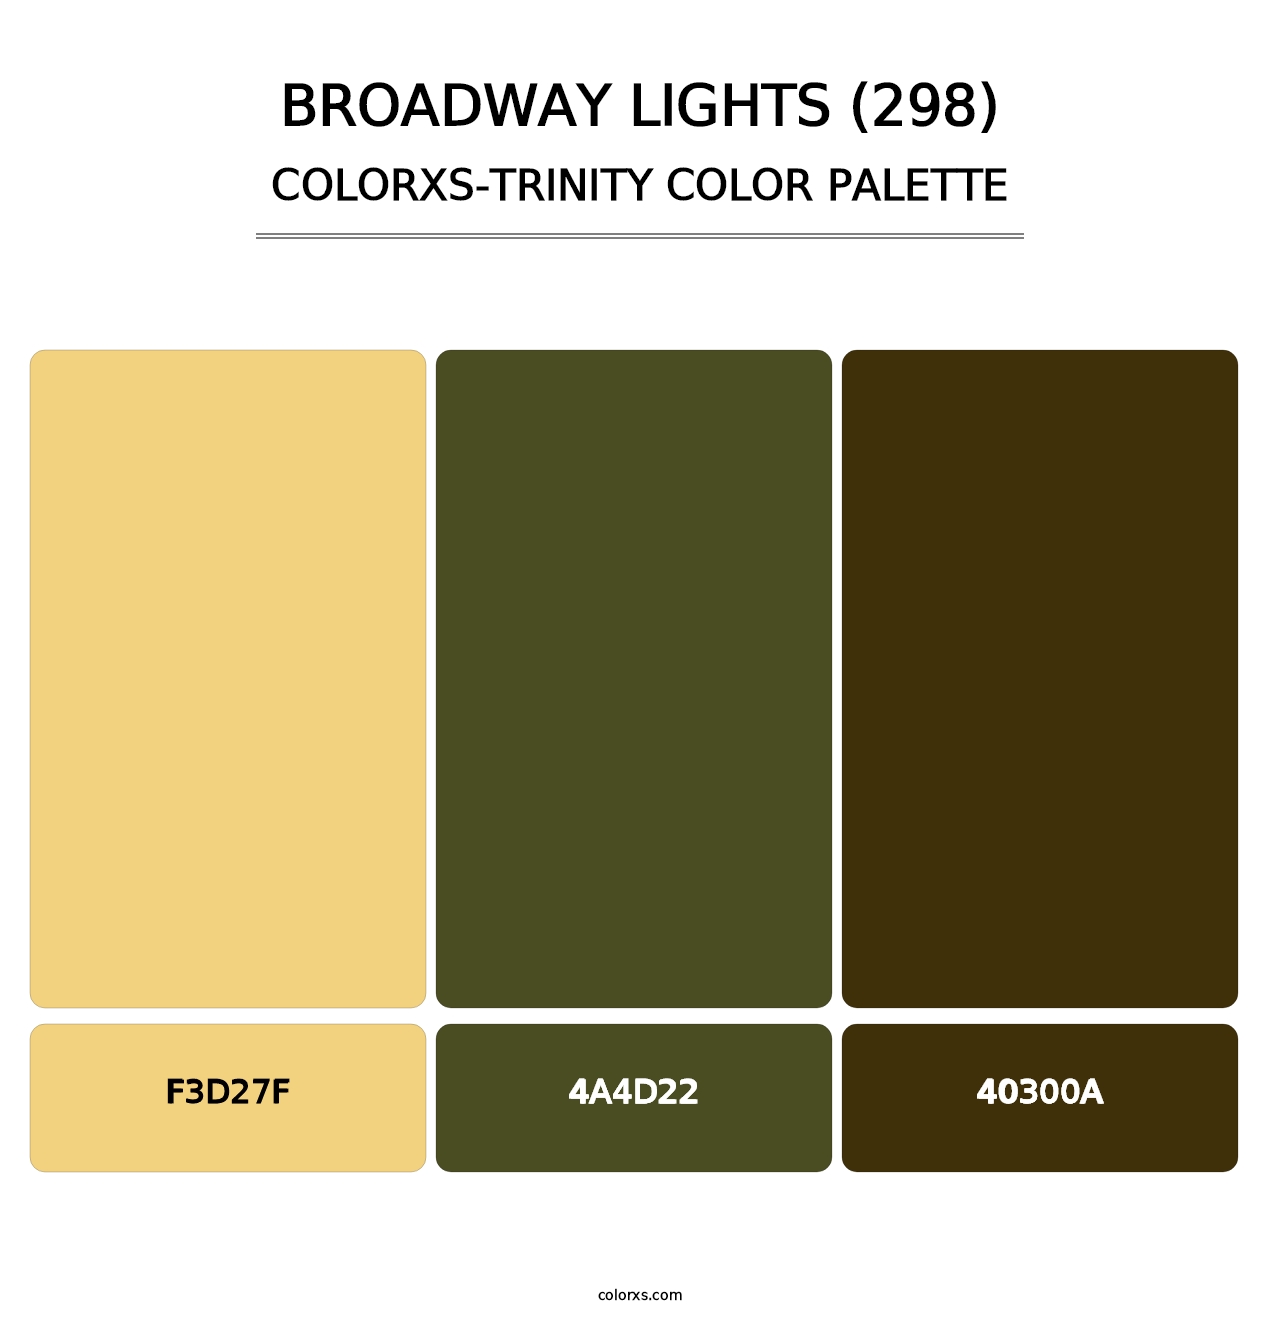 Broadway Lights (298) - Colorxs Trinity Palette